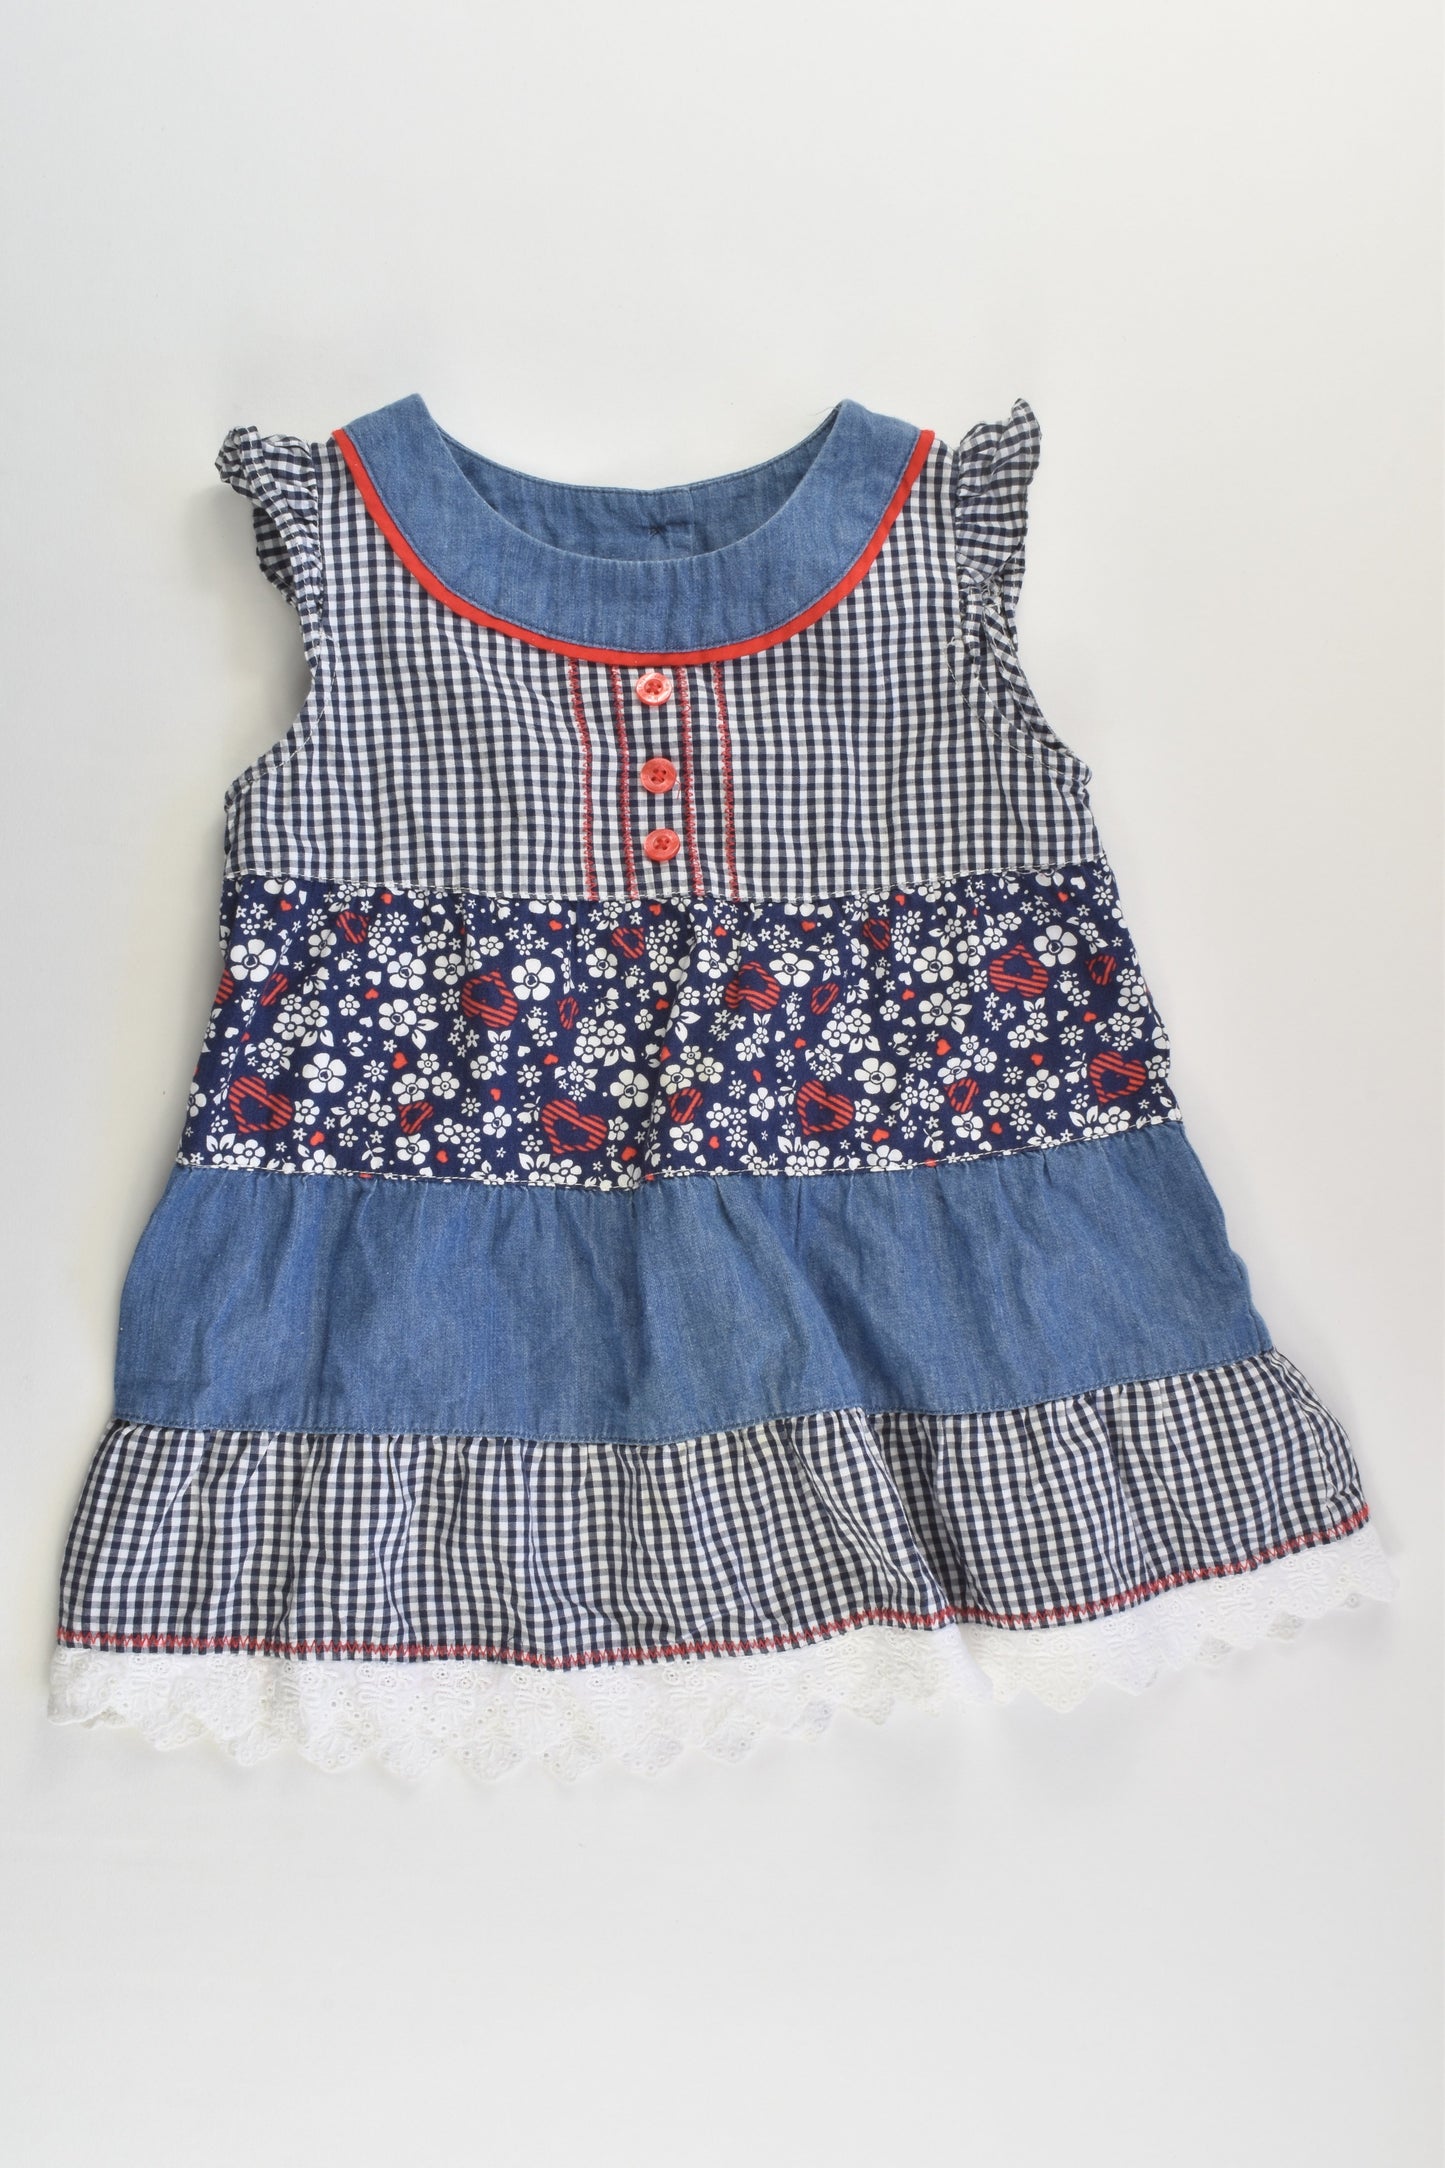 Bossini Baby Size 1 (12-18 months) Dress